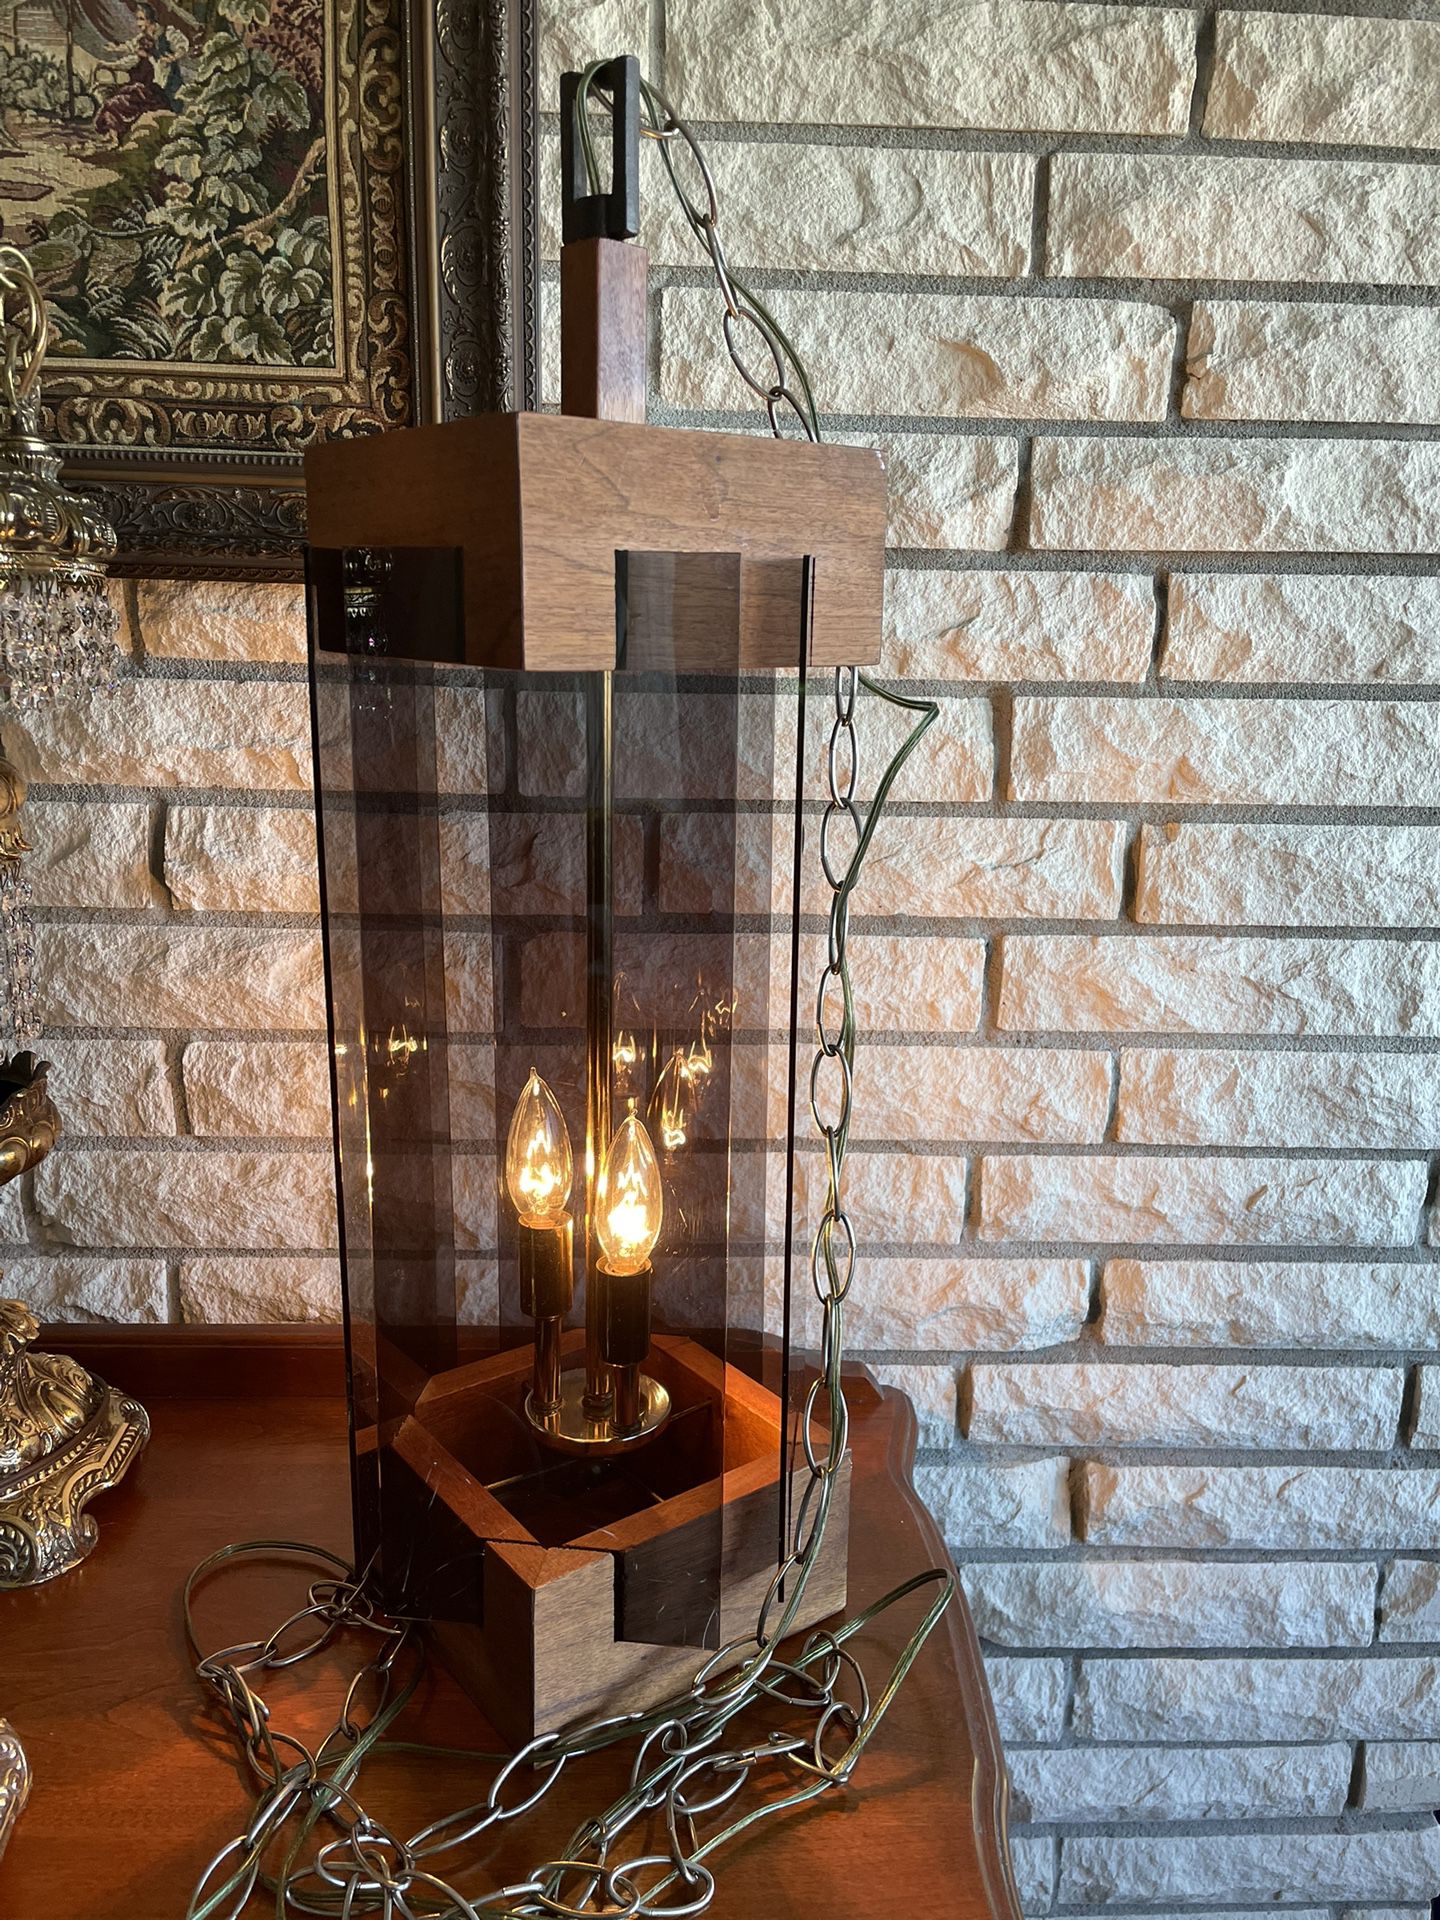 Aloe Stand Lamp – MWK Designs